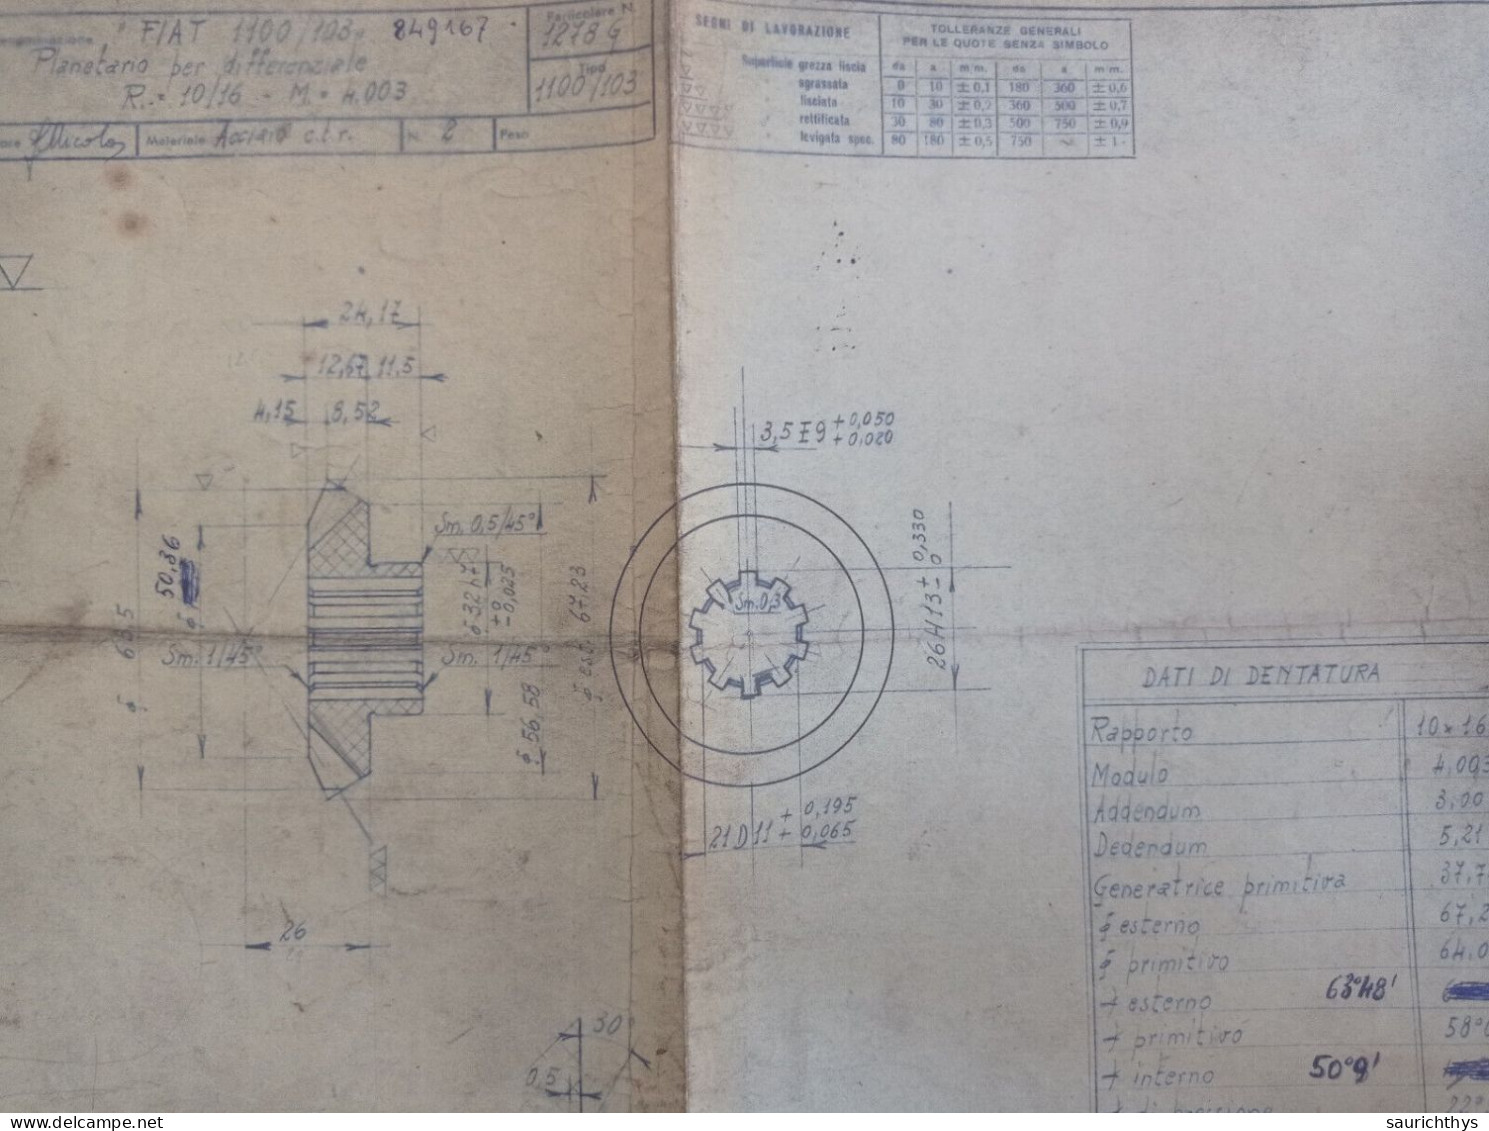 Cartella documenti Fiat 1100/103 600 Differenziale disegni tecnici in schizzi originali e copie conformi d'epoca